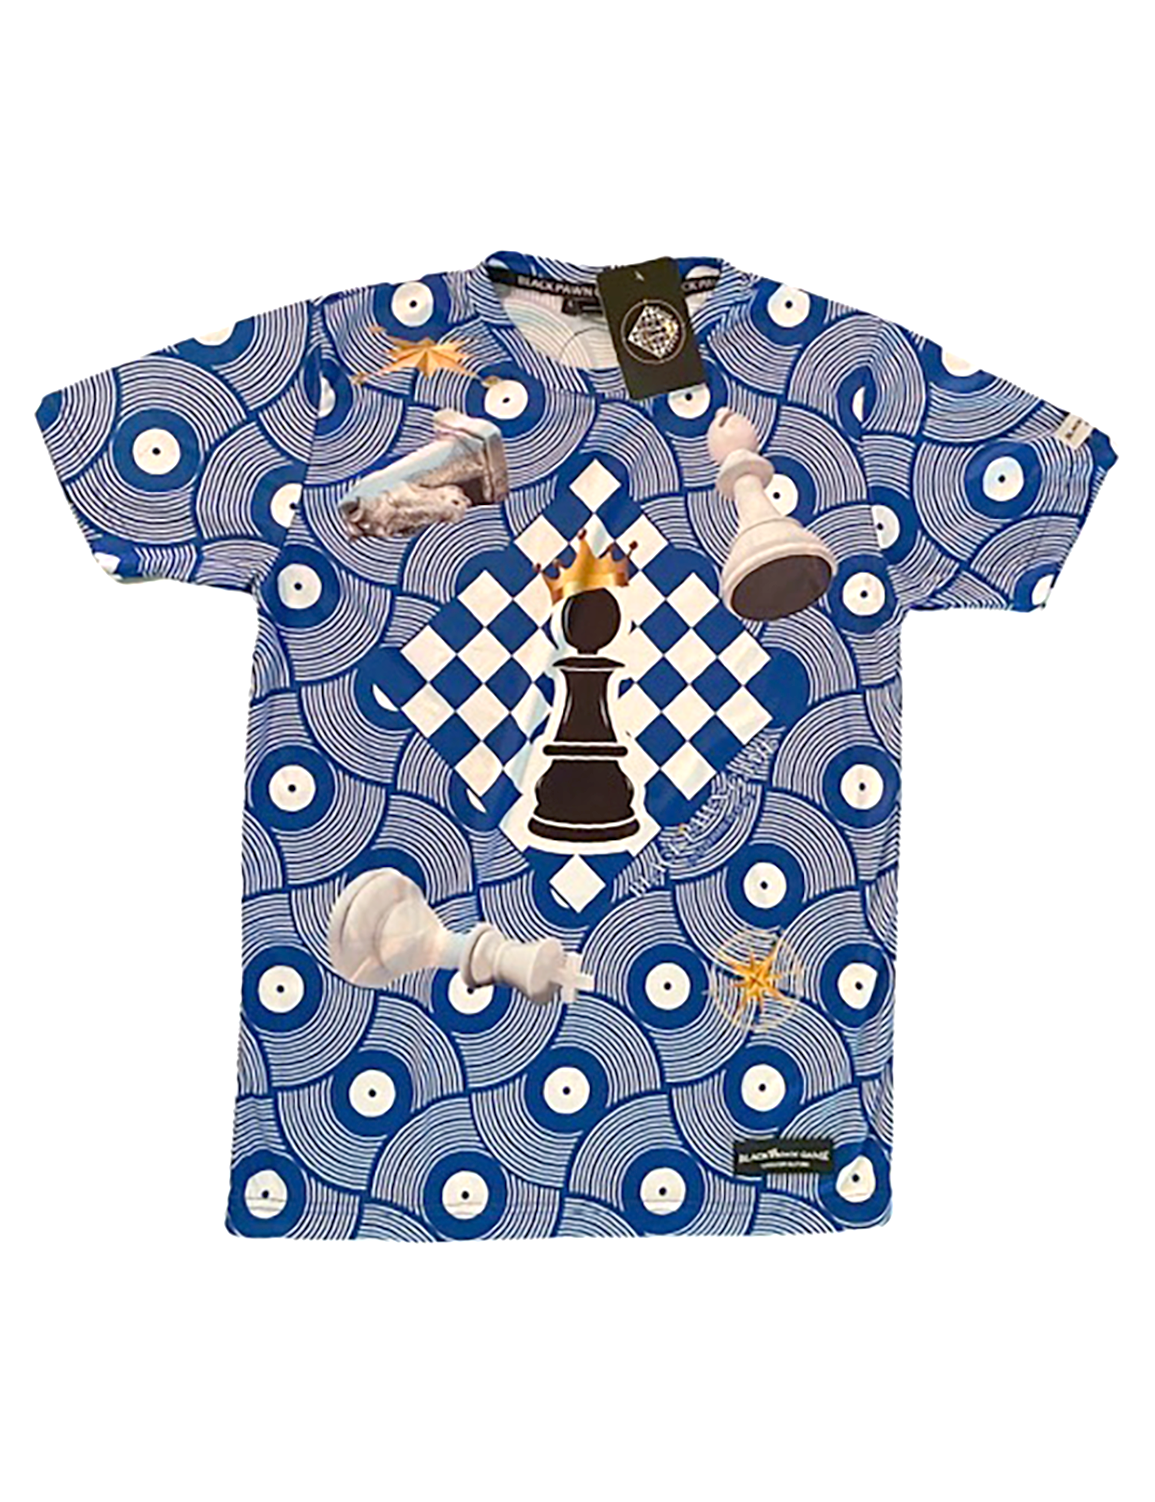 Black Pawn Game Royal Blue Sublimation Shirt (3XL)